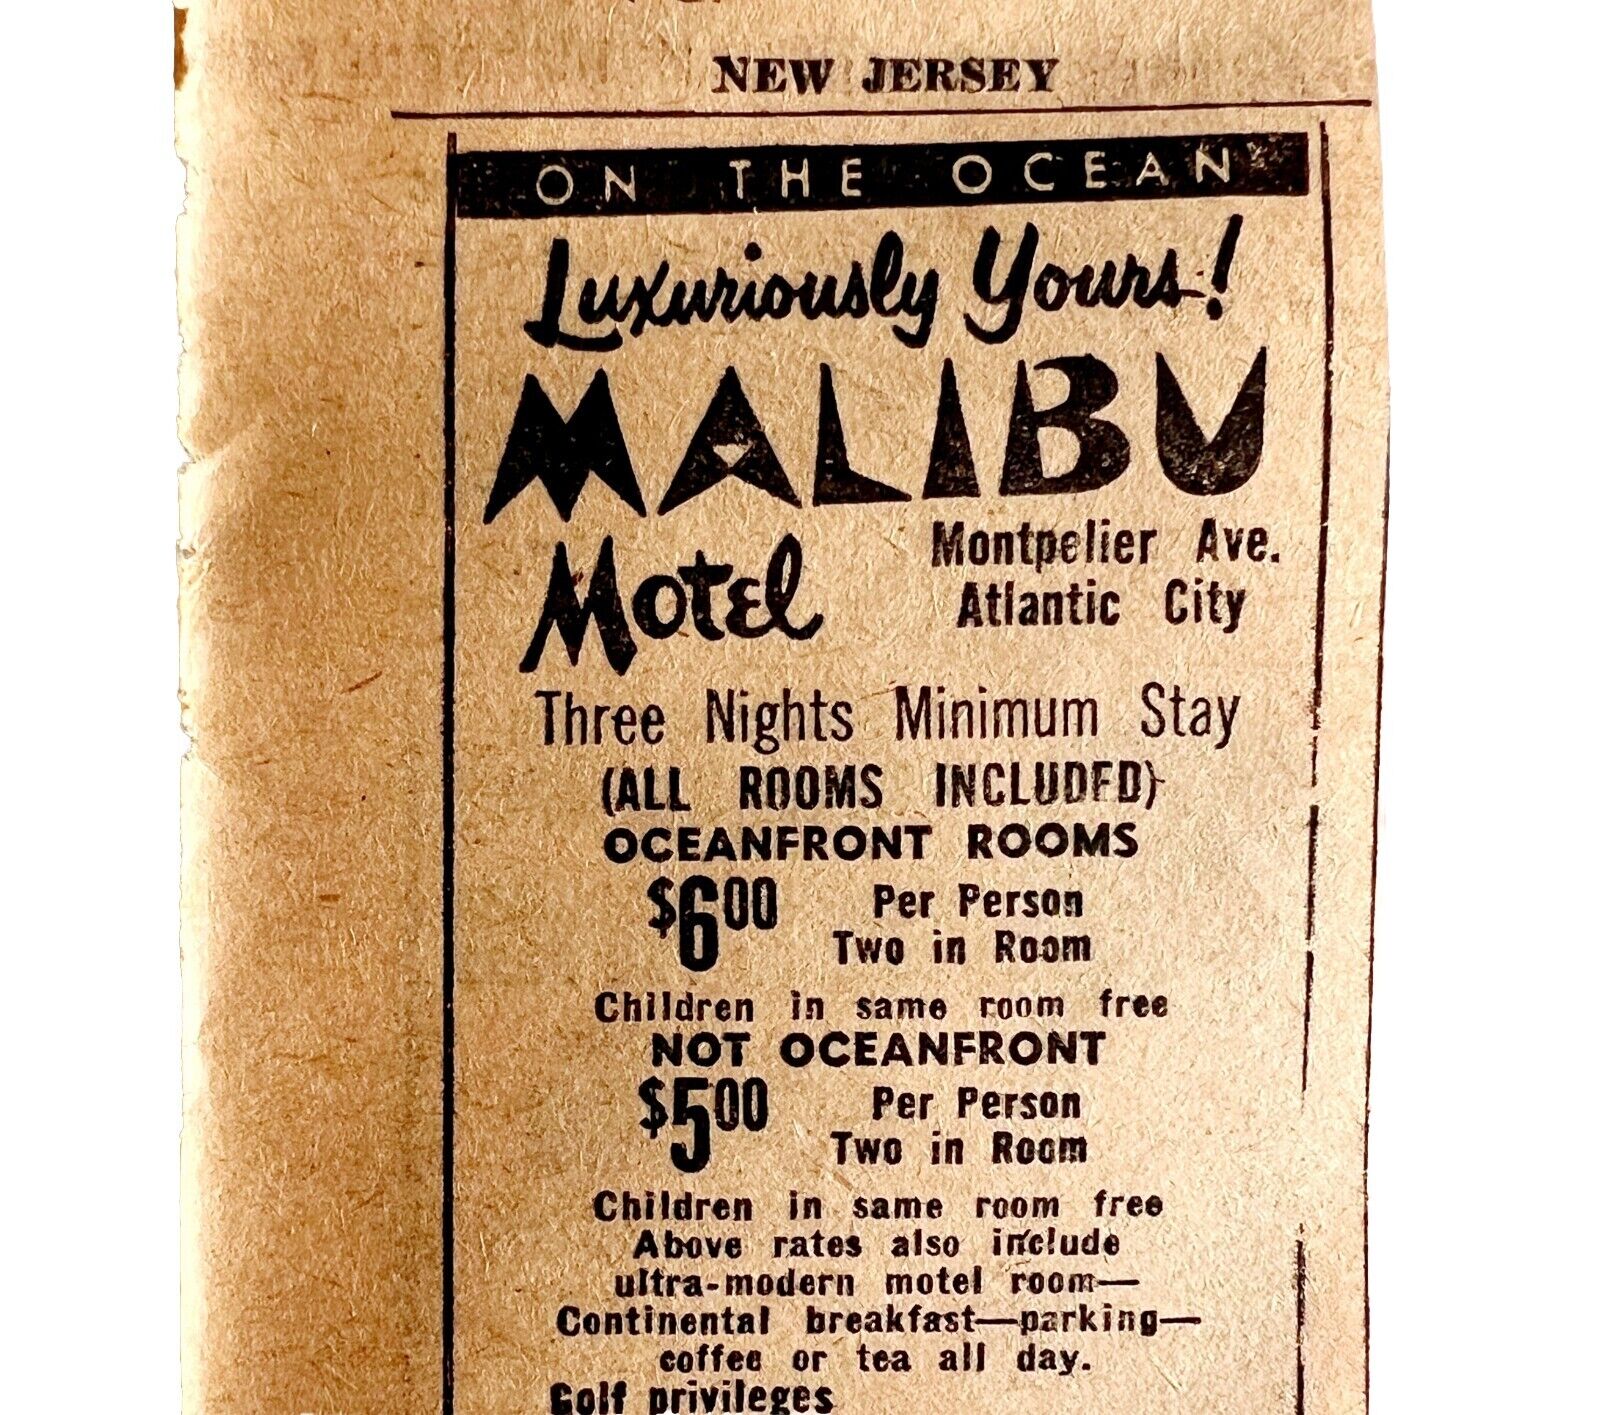 Malibu Motel Atlantic City Advertisement 1963 New Jersey Oceanfront DWDD17